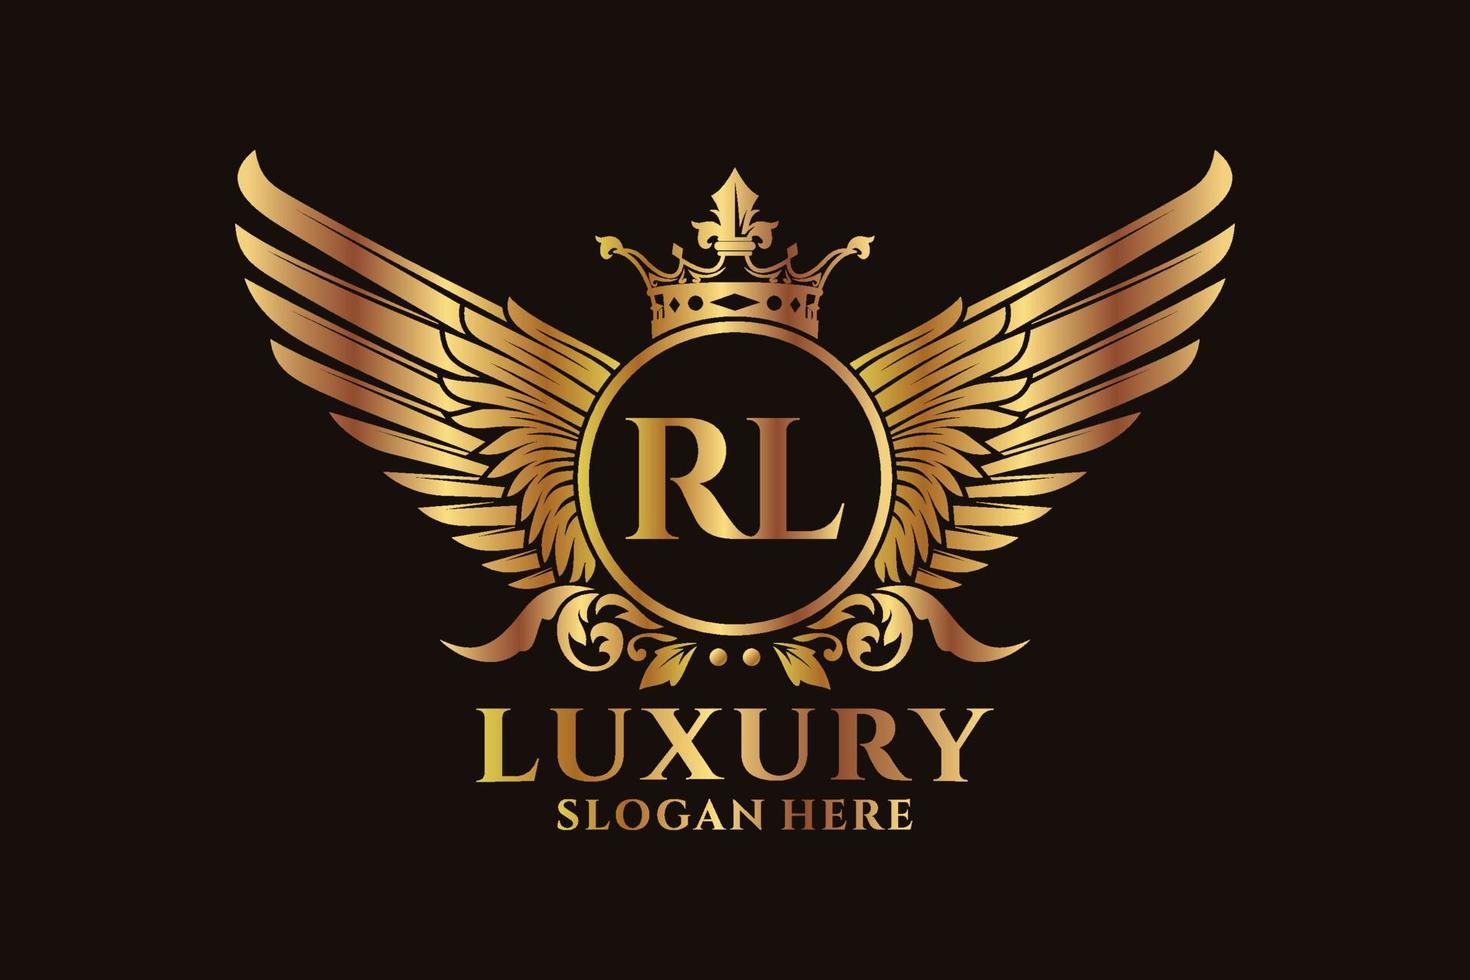 luxe Koninklijk vleugel brief rl kam goud kleur logo vector, zege logo, kam logo, vleugel logo, vector logo sjabloon.